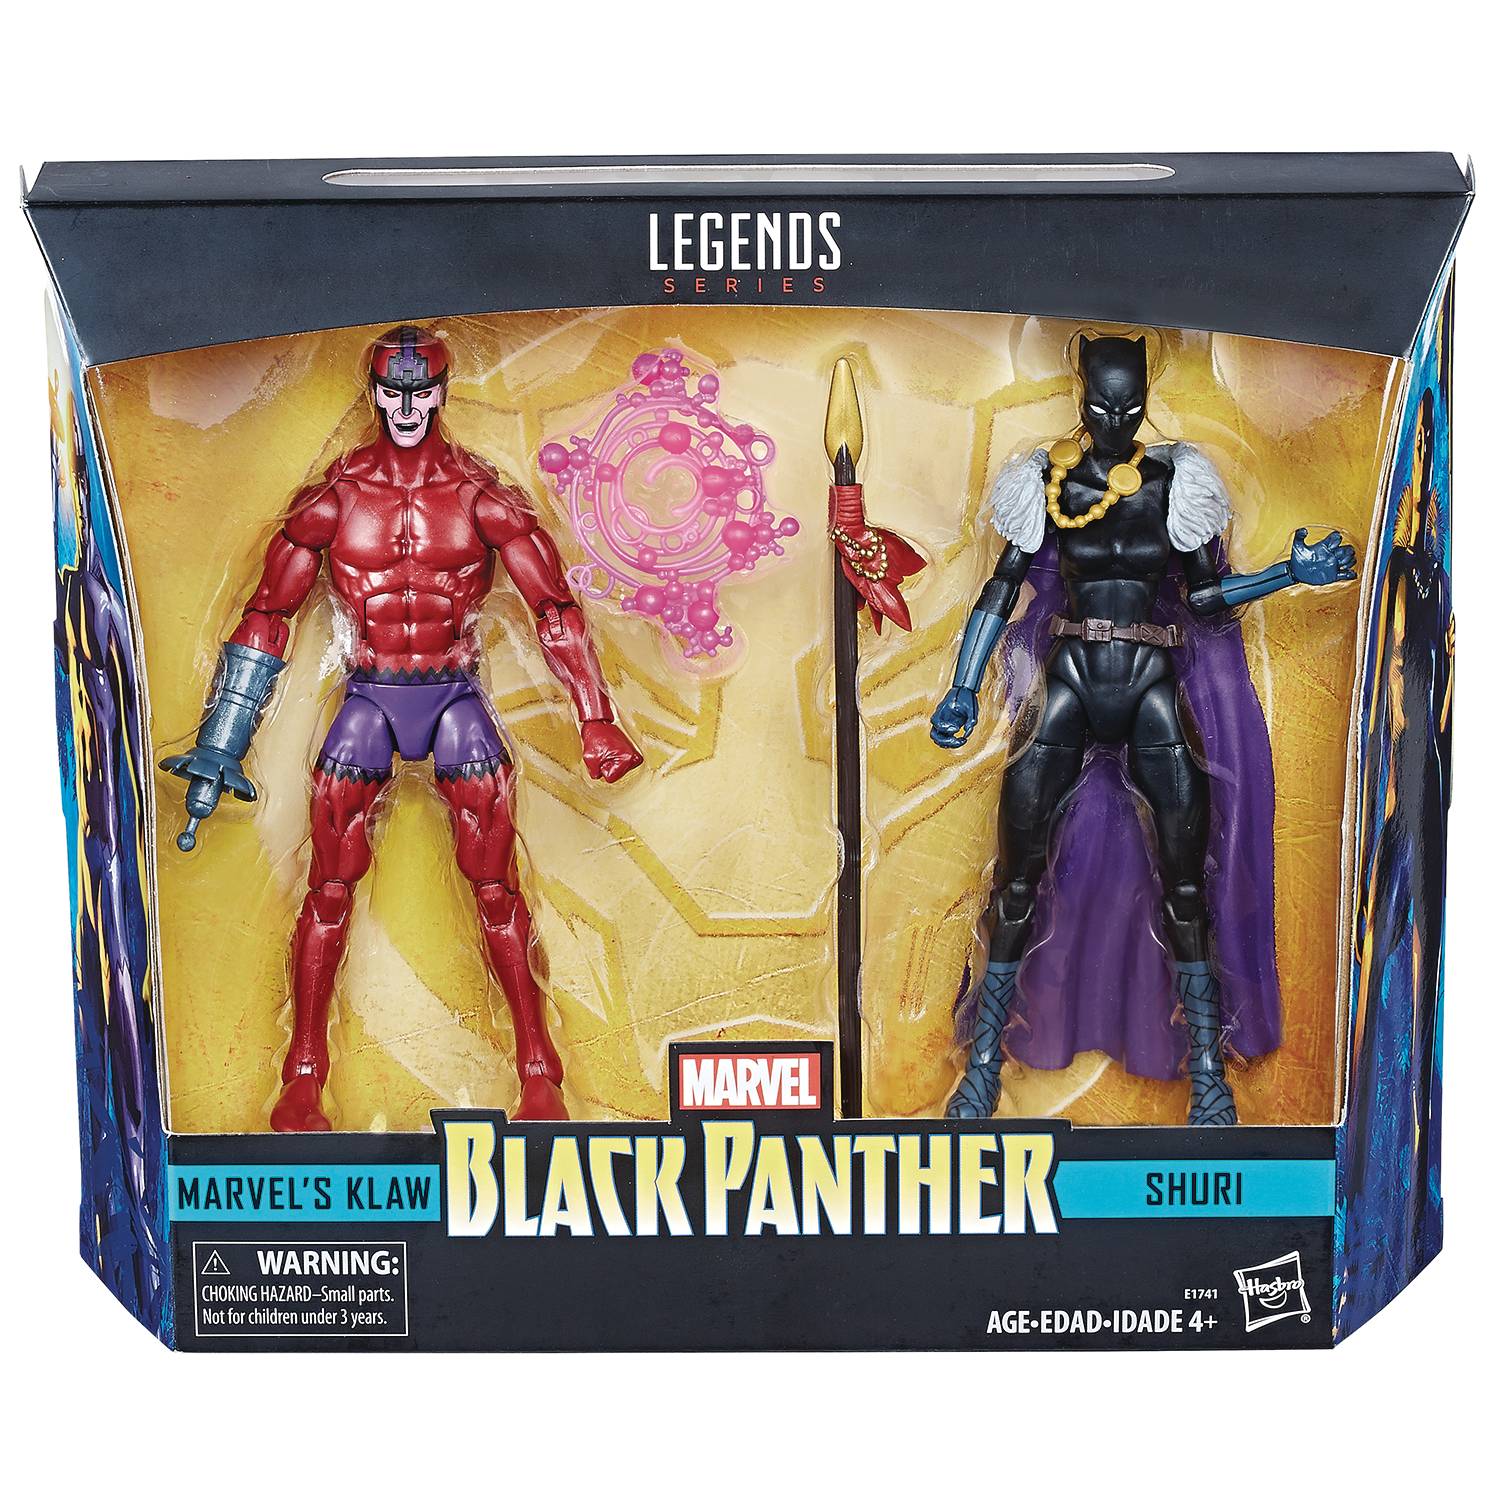 Black Panther Legends Shuri/klaw 6 Inch Action Figure 2 Pack Cs